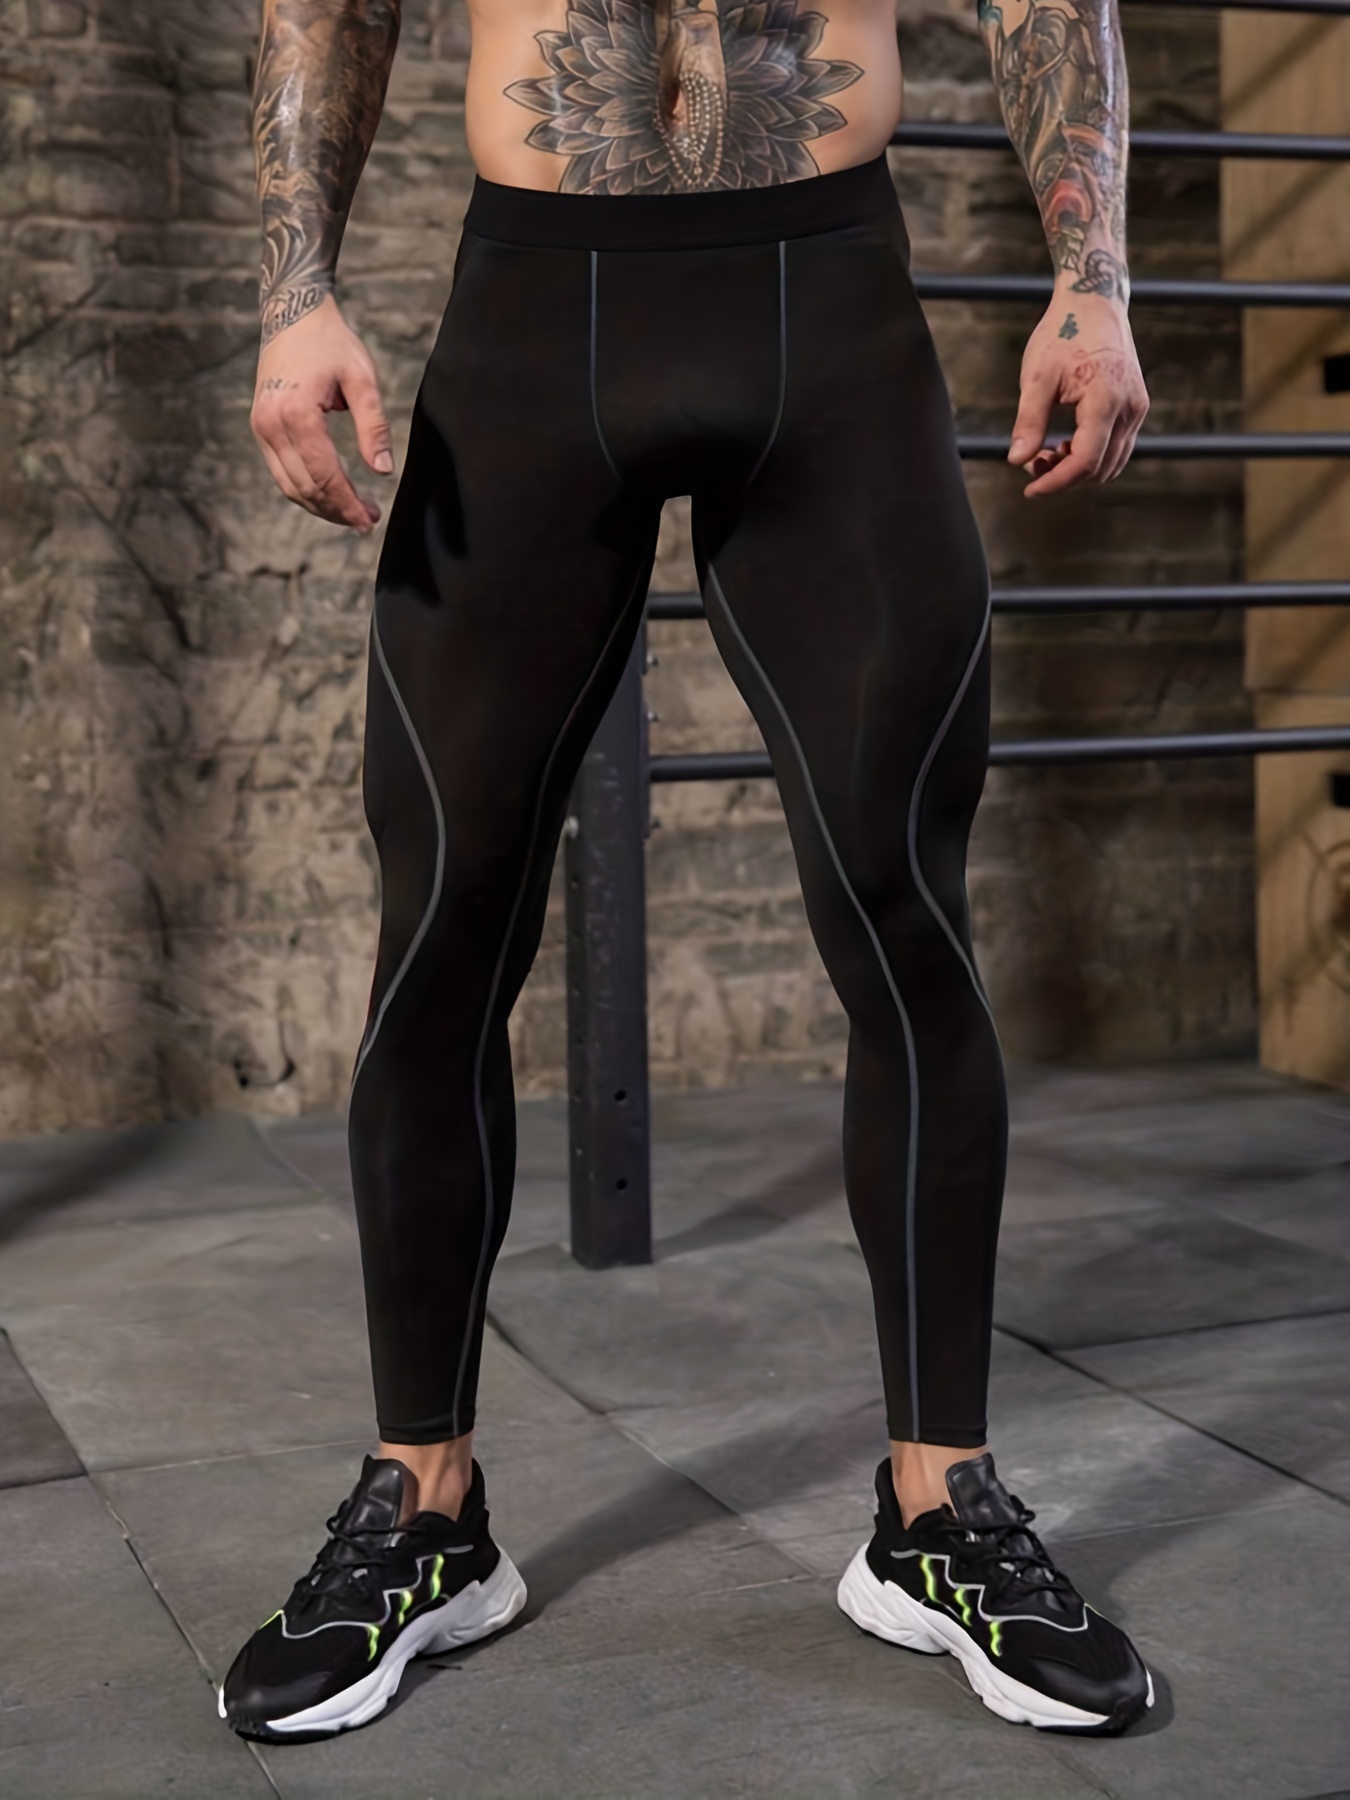 PRO Sports Fitness Leggings, Men's Tight Compression Yoga Training High  Elastic Speed Dry Pants